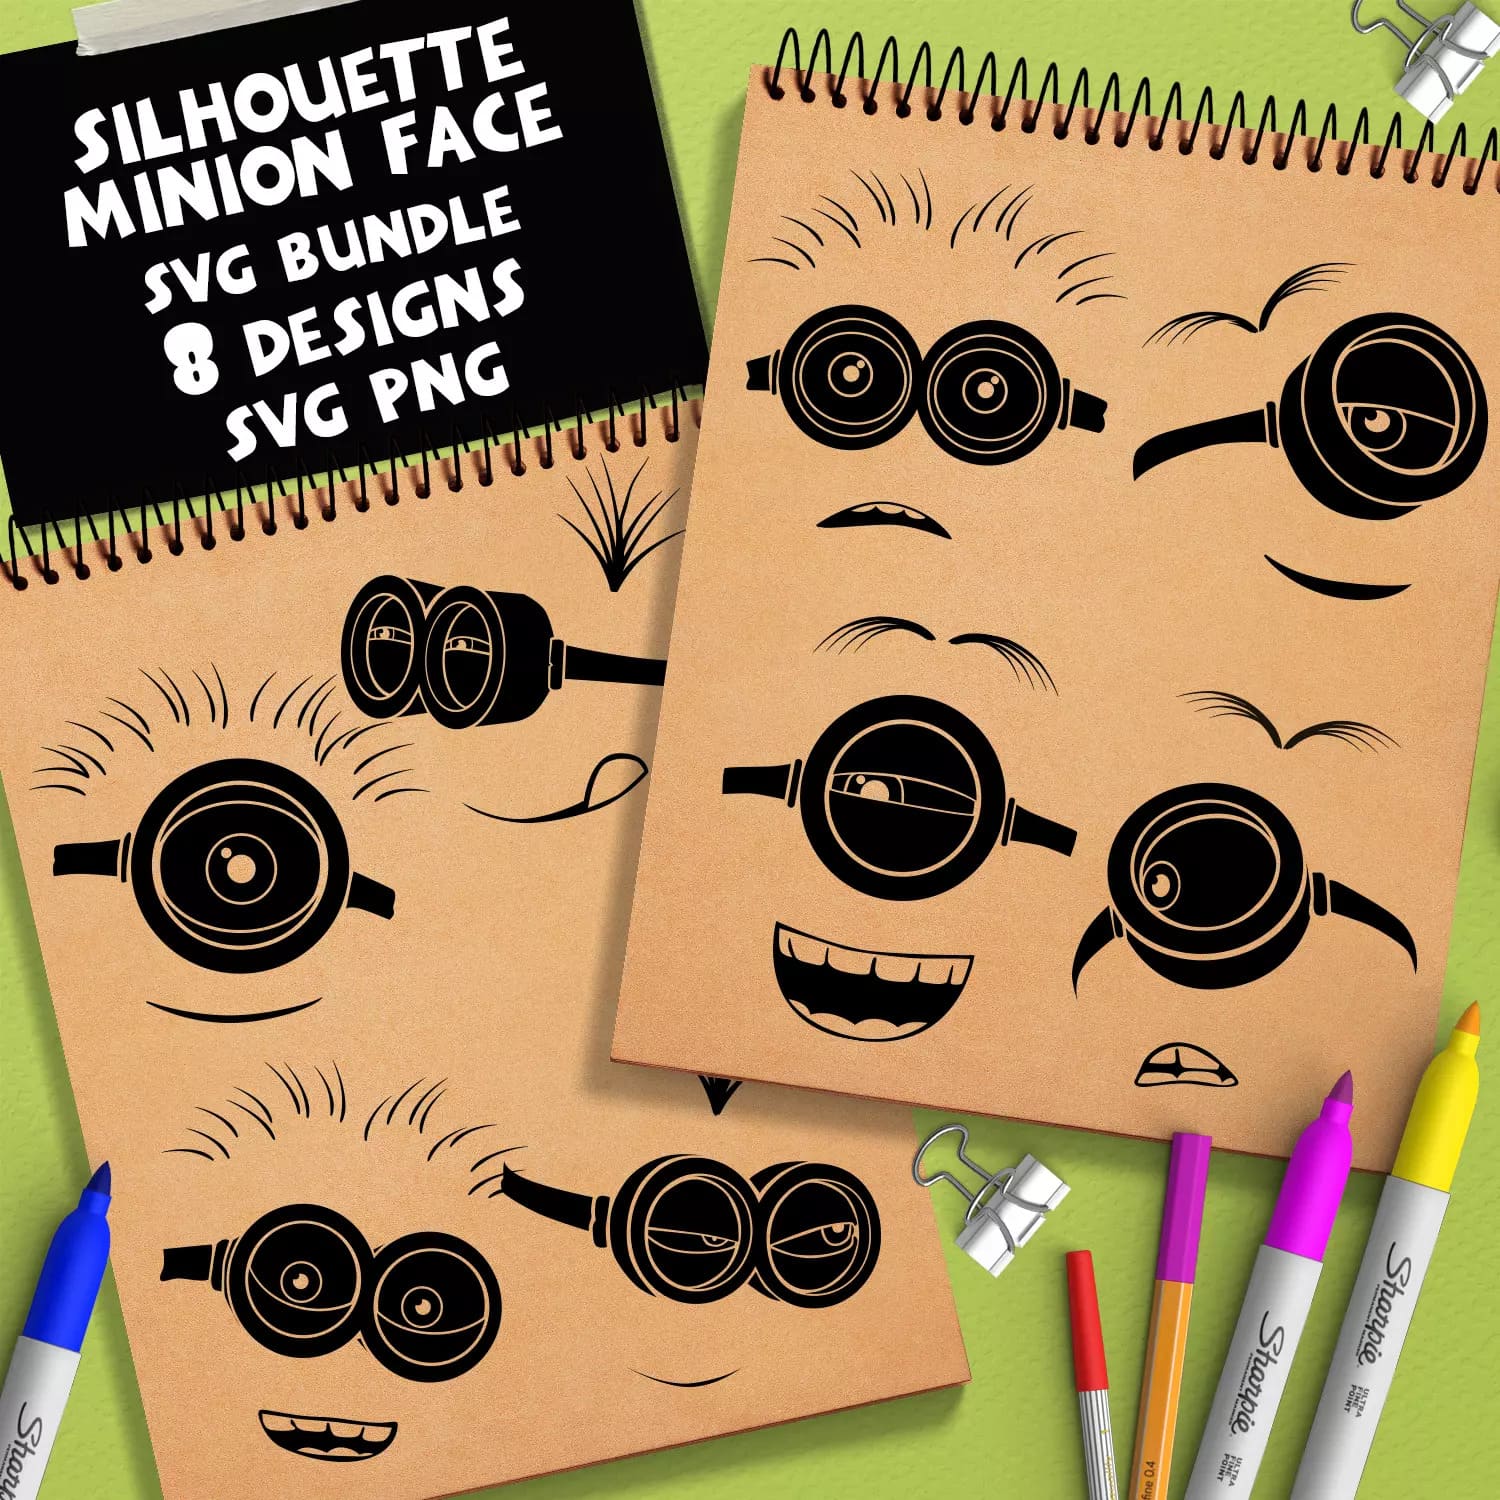 Silhouette Minion Face SVG Preview 7.